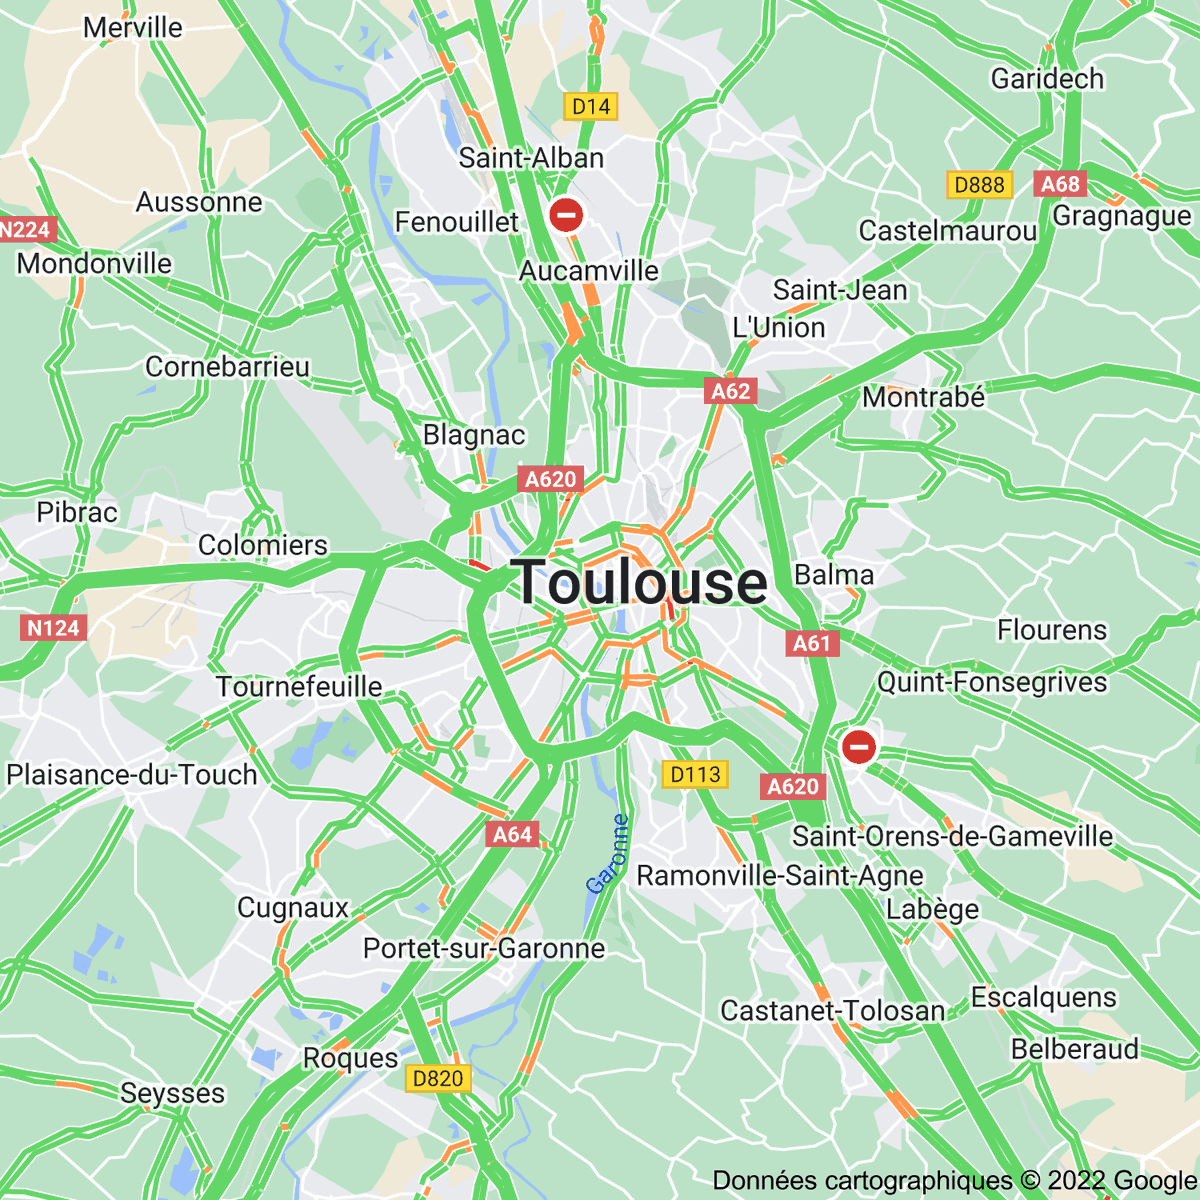 [FLASH 12:00] Trafic à Toulouse toulousetrafic.com #Toulouse #ToulousePeriph #InfoTrafic